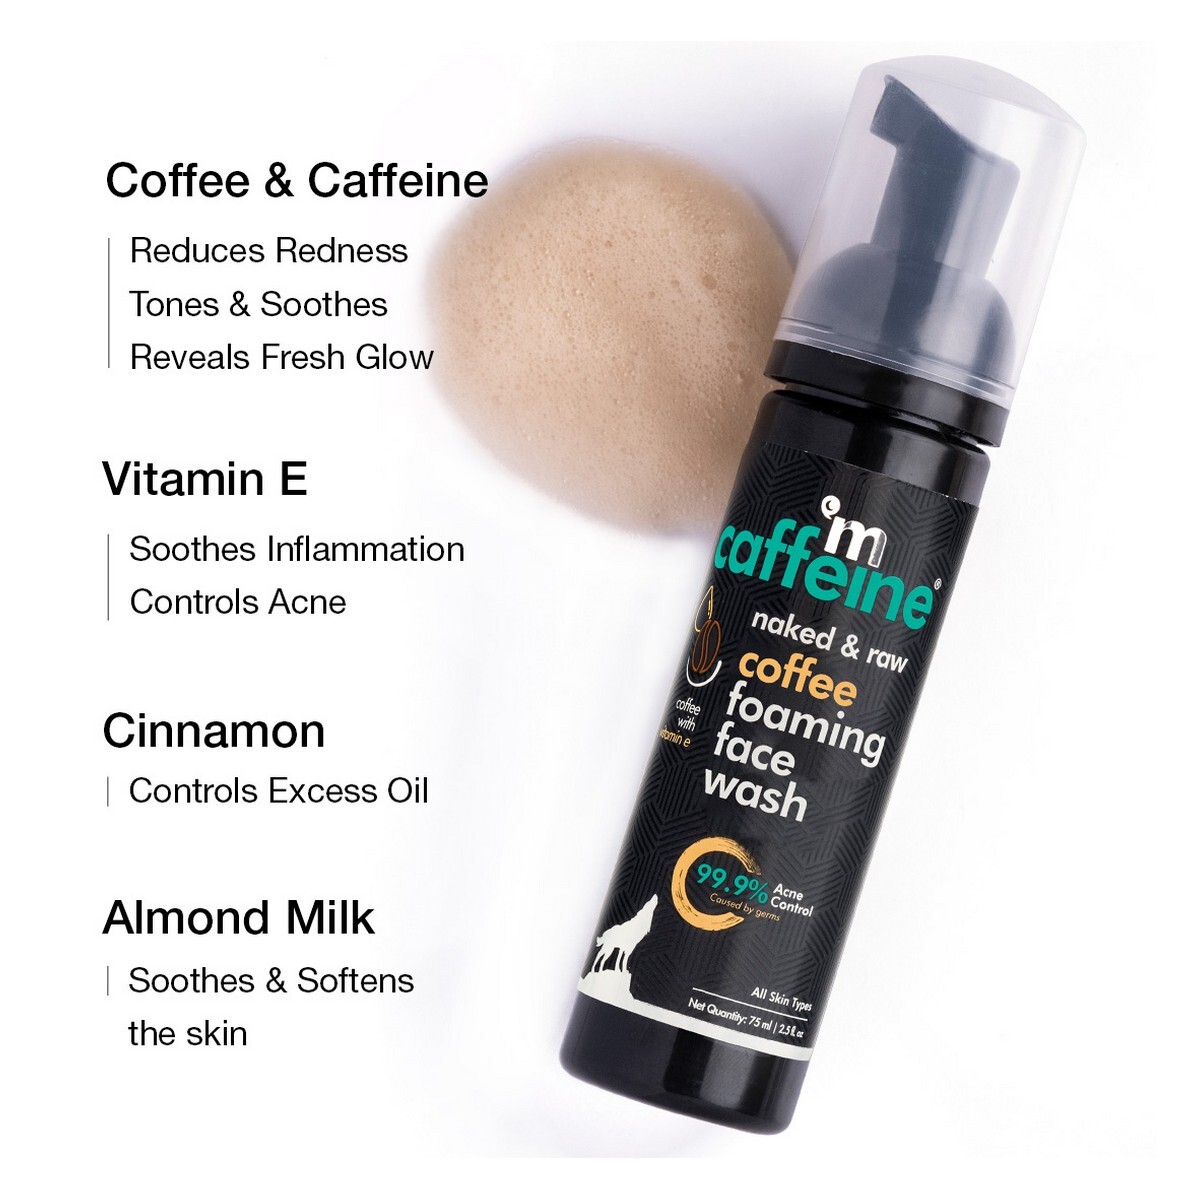 mCaffeine Anti Acne Coffee Foaming Face Wash(75 ml)